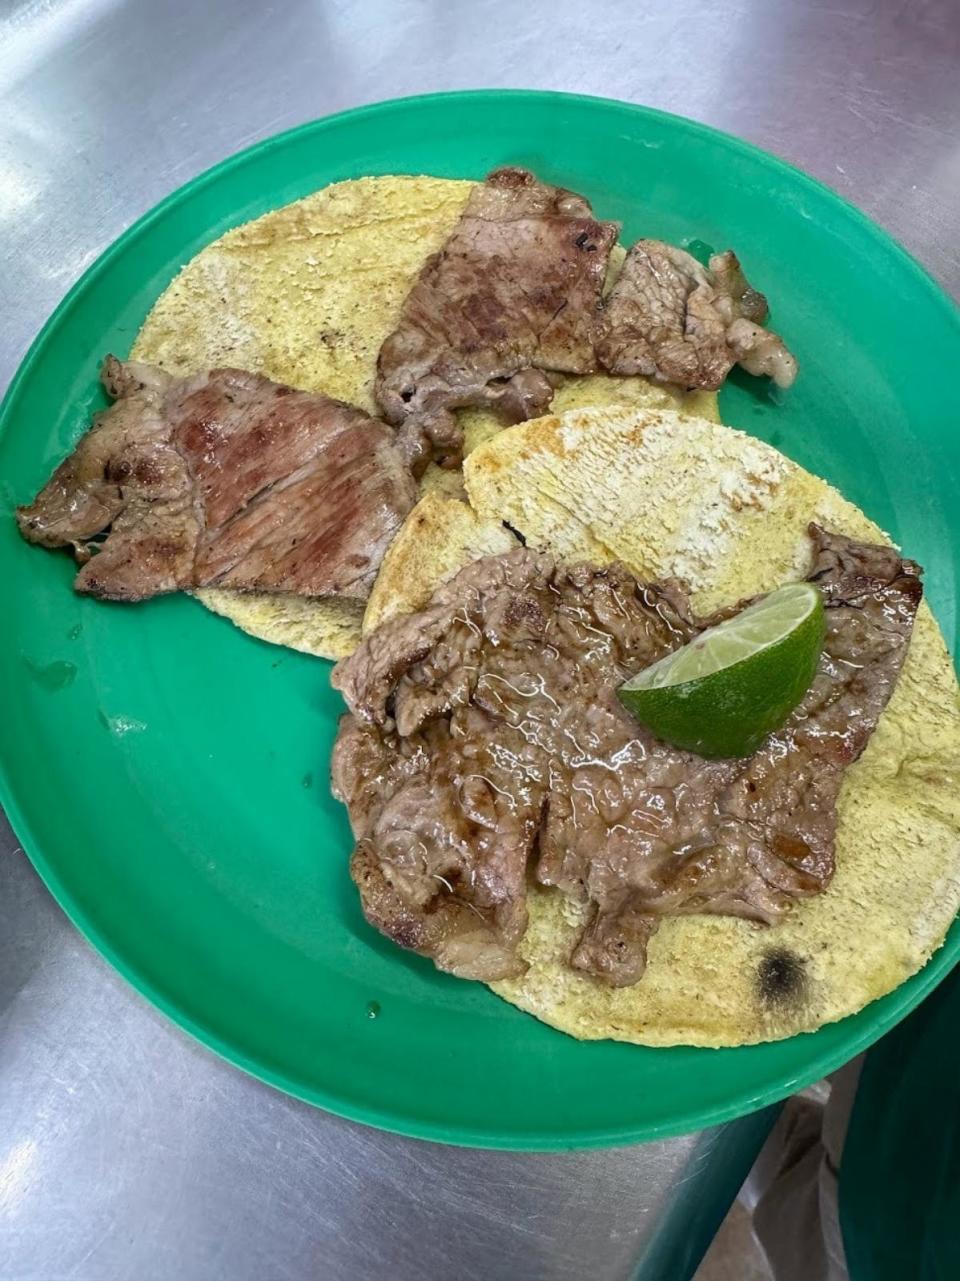 PHOTO: A plate of tacos at Taquería El Califa de León in Mexico City. (The MICHELIN Guide)